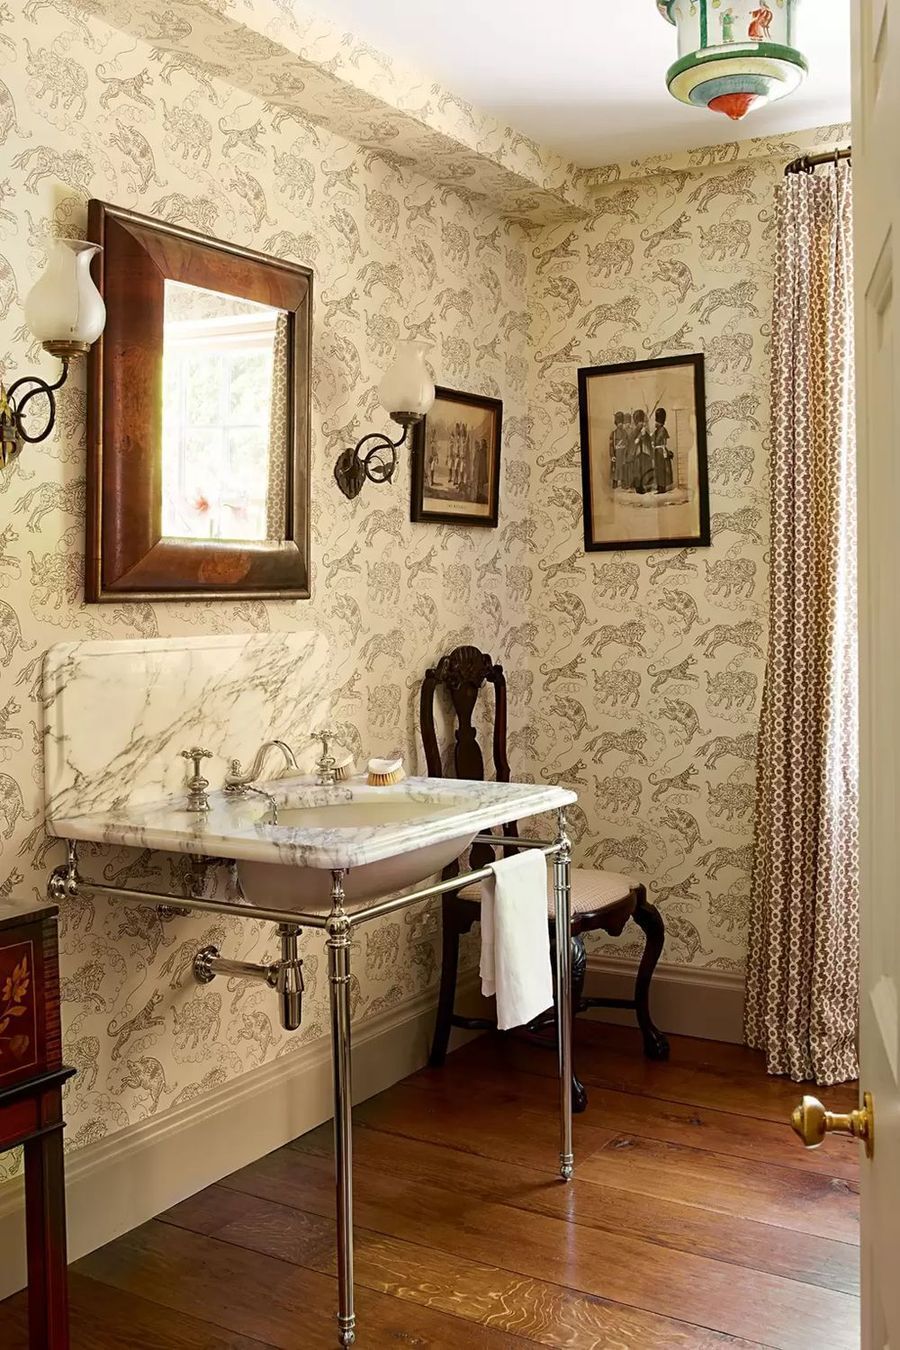 Marble Bathroom sink vanity in English Country Bathroom decor via Rupert and Anna Bradstock